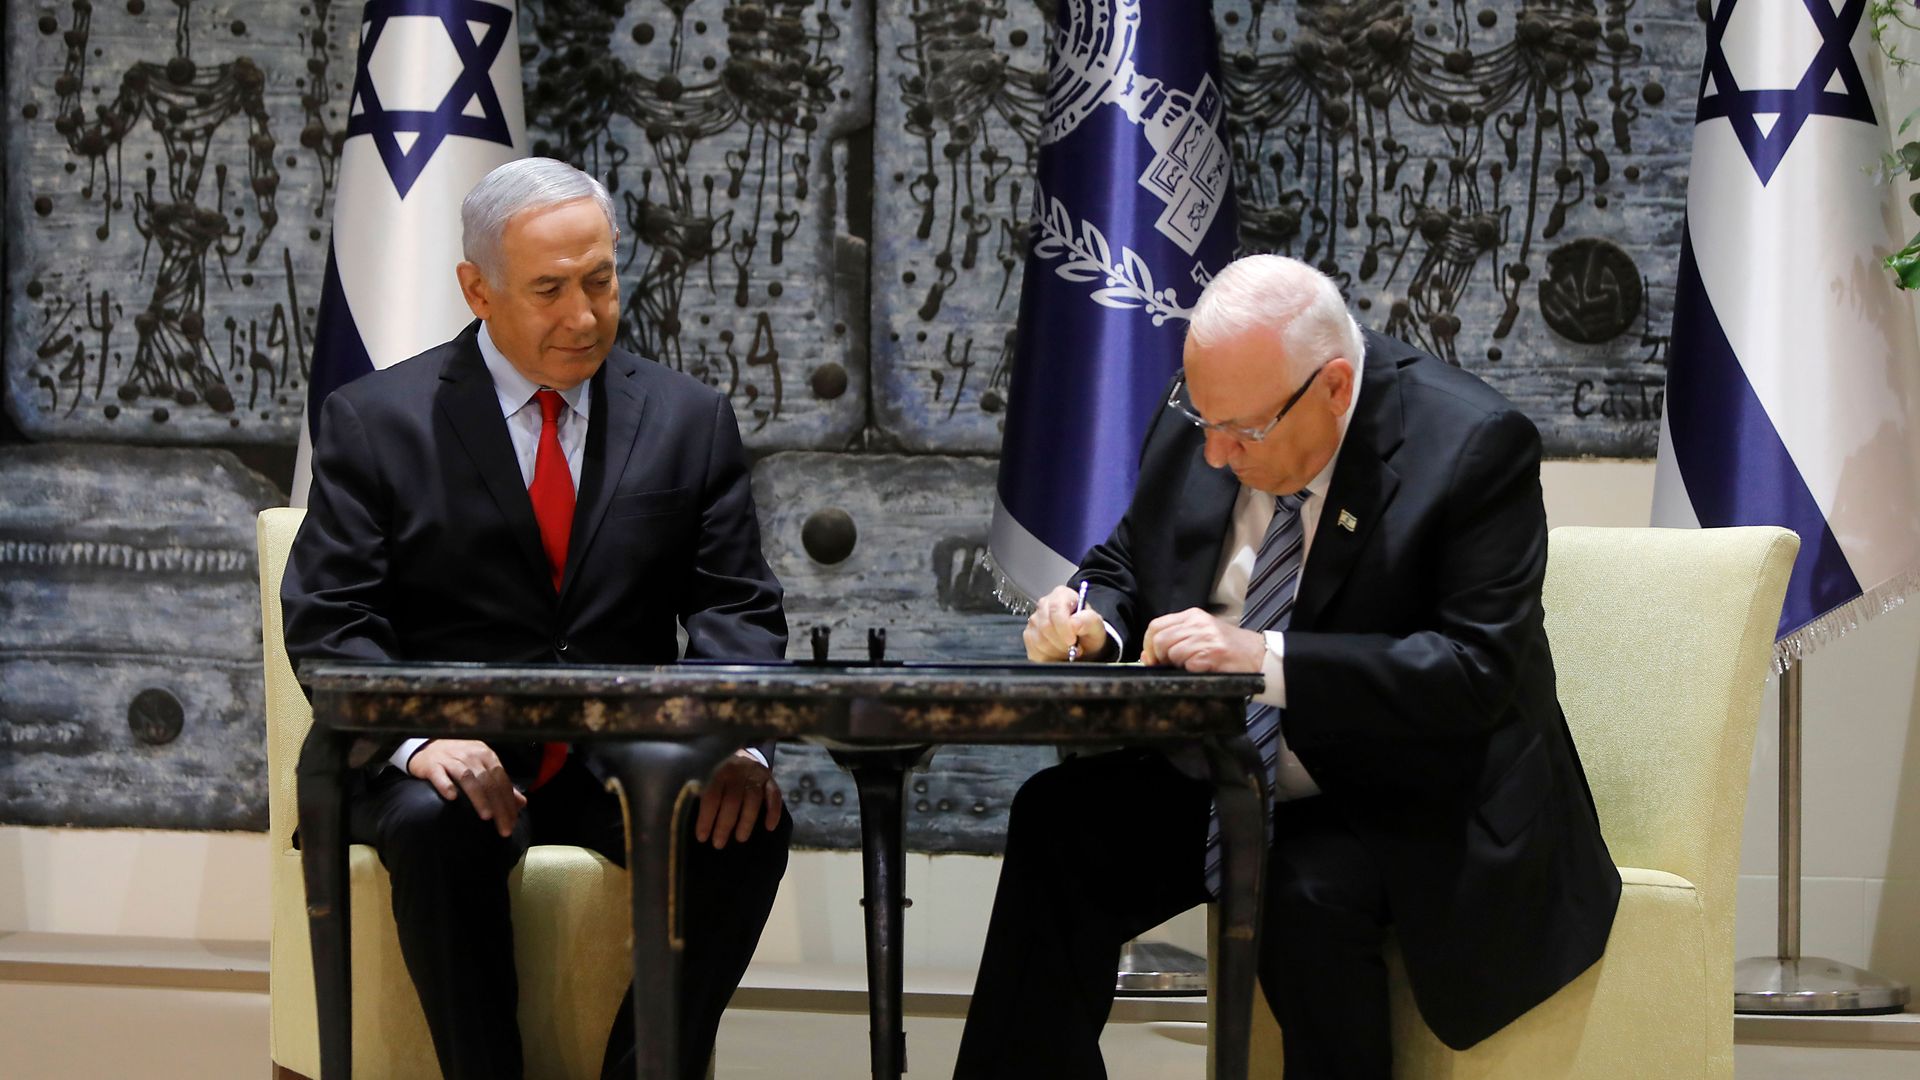 Netanyahu with Israel's president